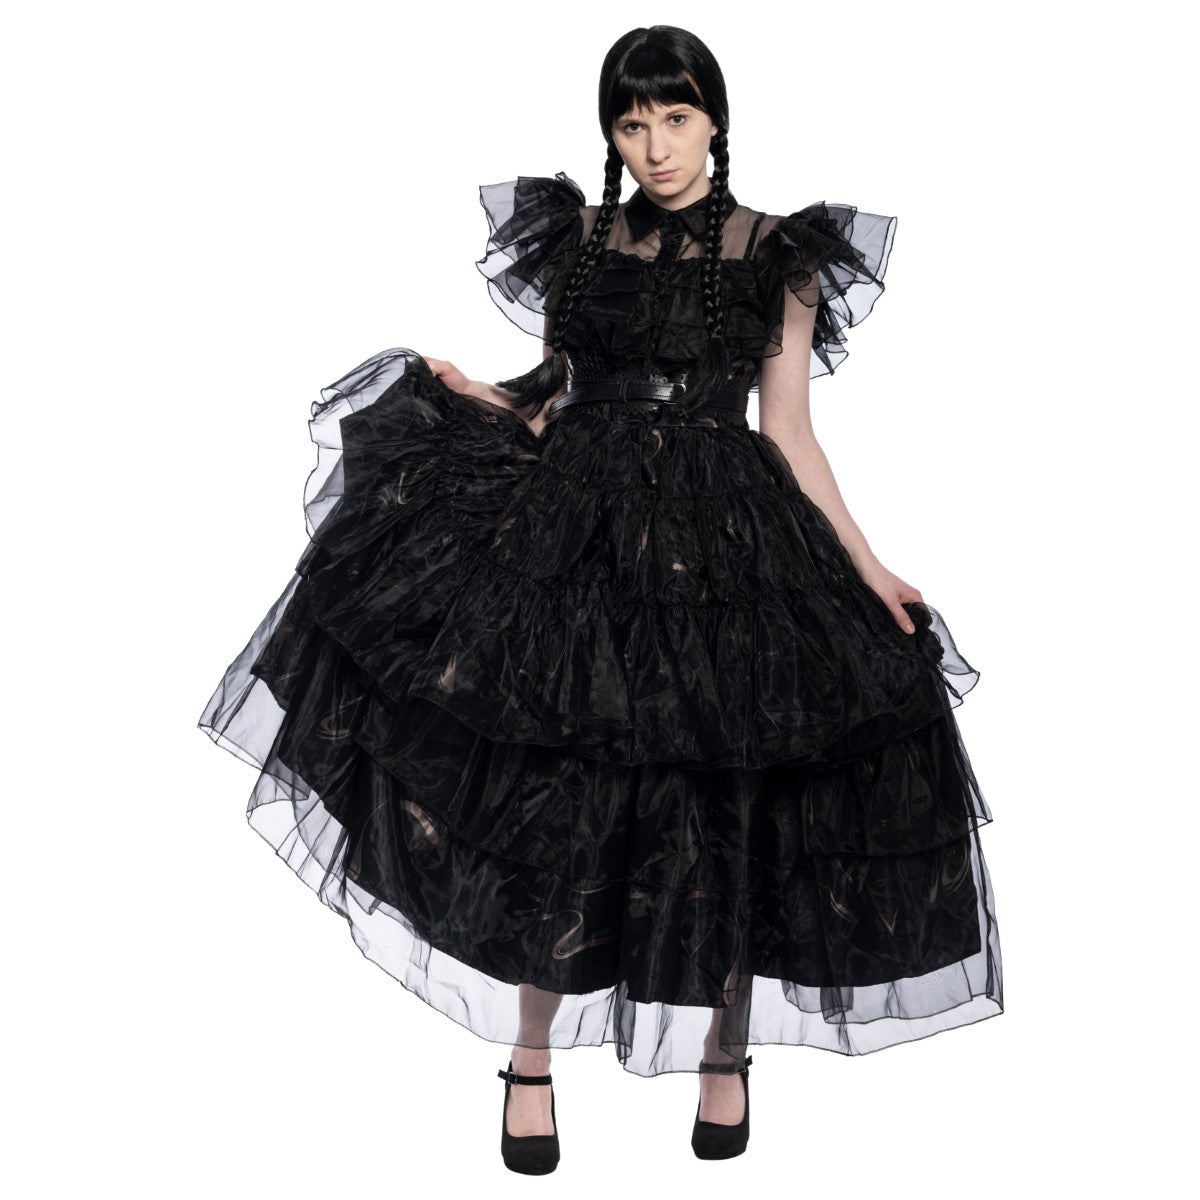 Wednesday Dress Wednesday Black Dress Wednesday Addams -  Finland